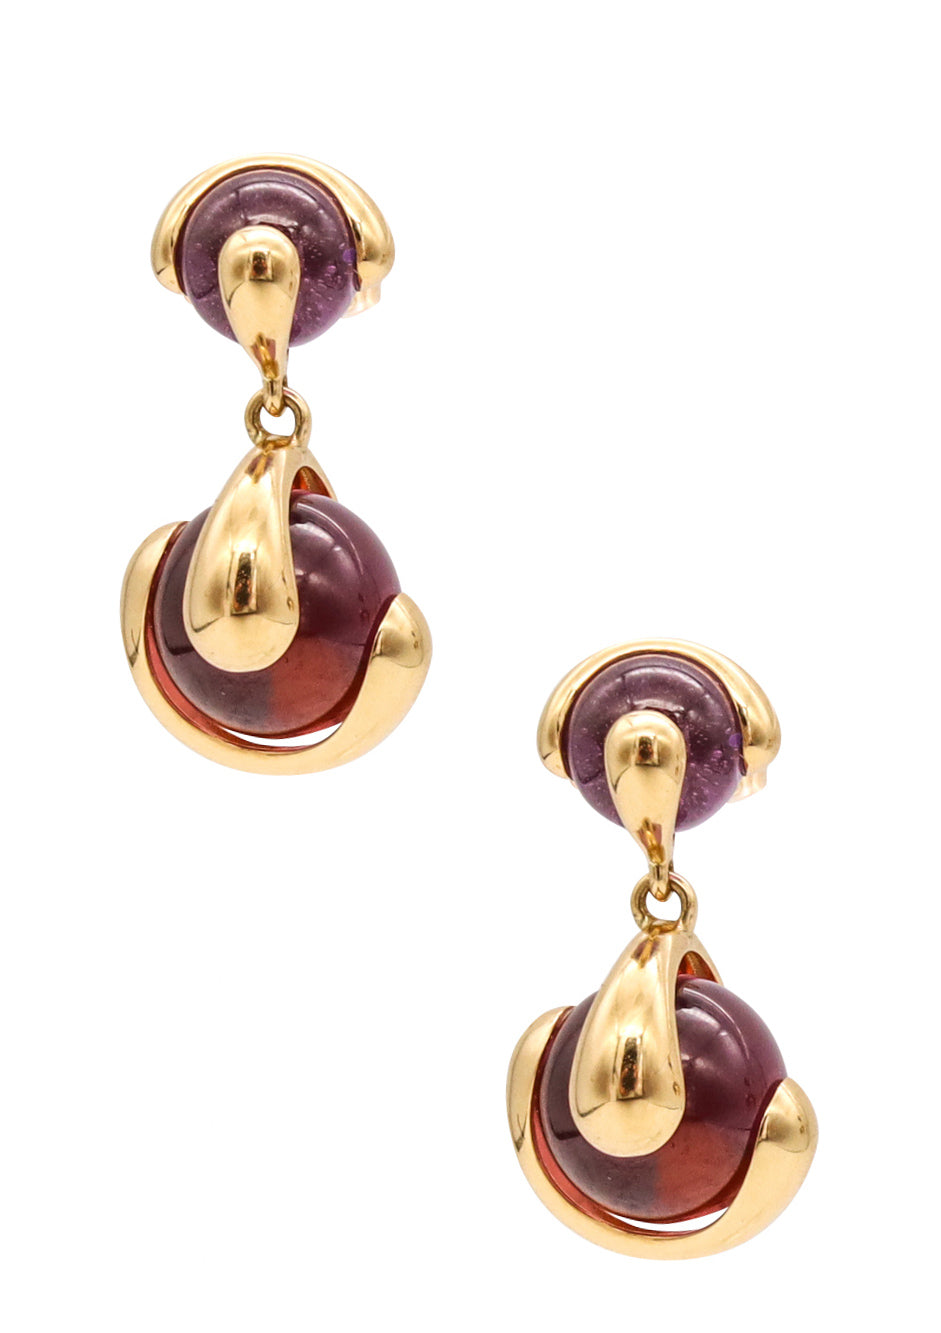 *Marina B. Milano Cardan drop earrings in 18 kt yellow gold with four amethyst